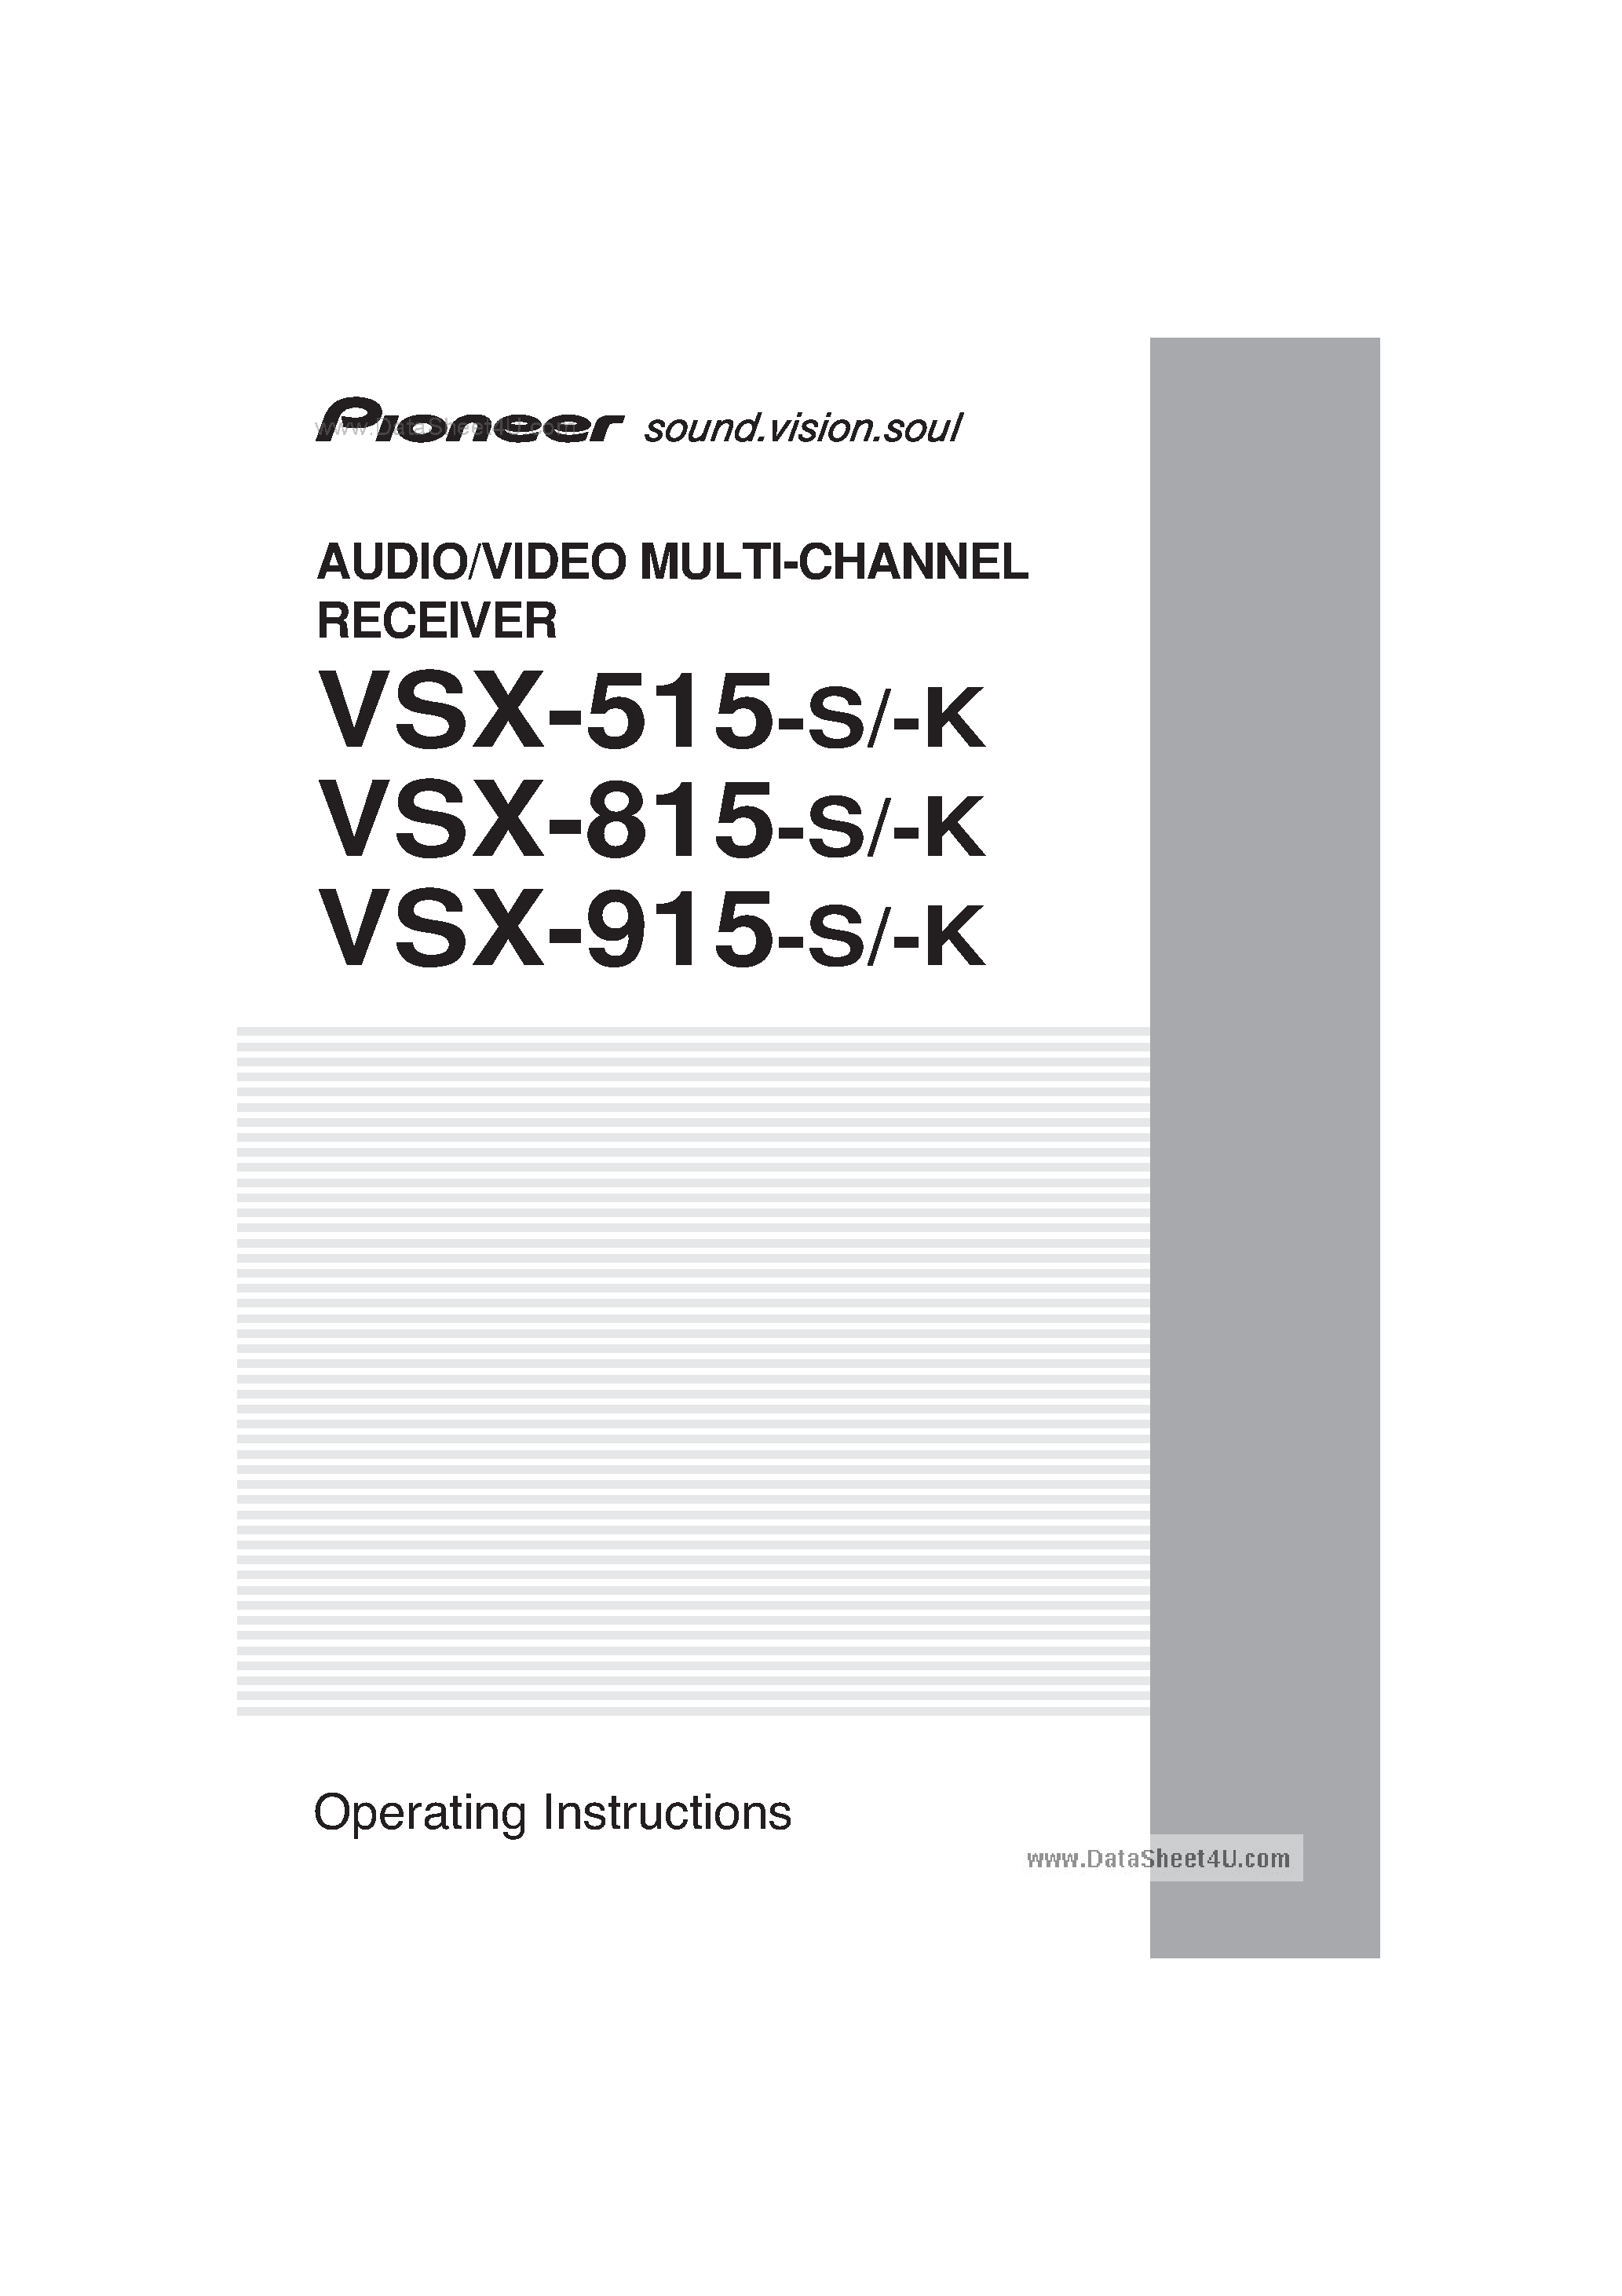 Даташит VSX-515 - (VSX-x15-s/-k) Audio / Video Multi Channel Receiver страница 1